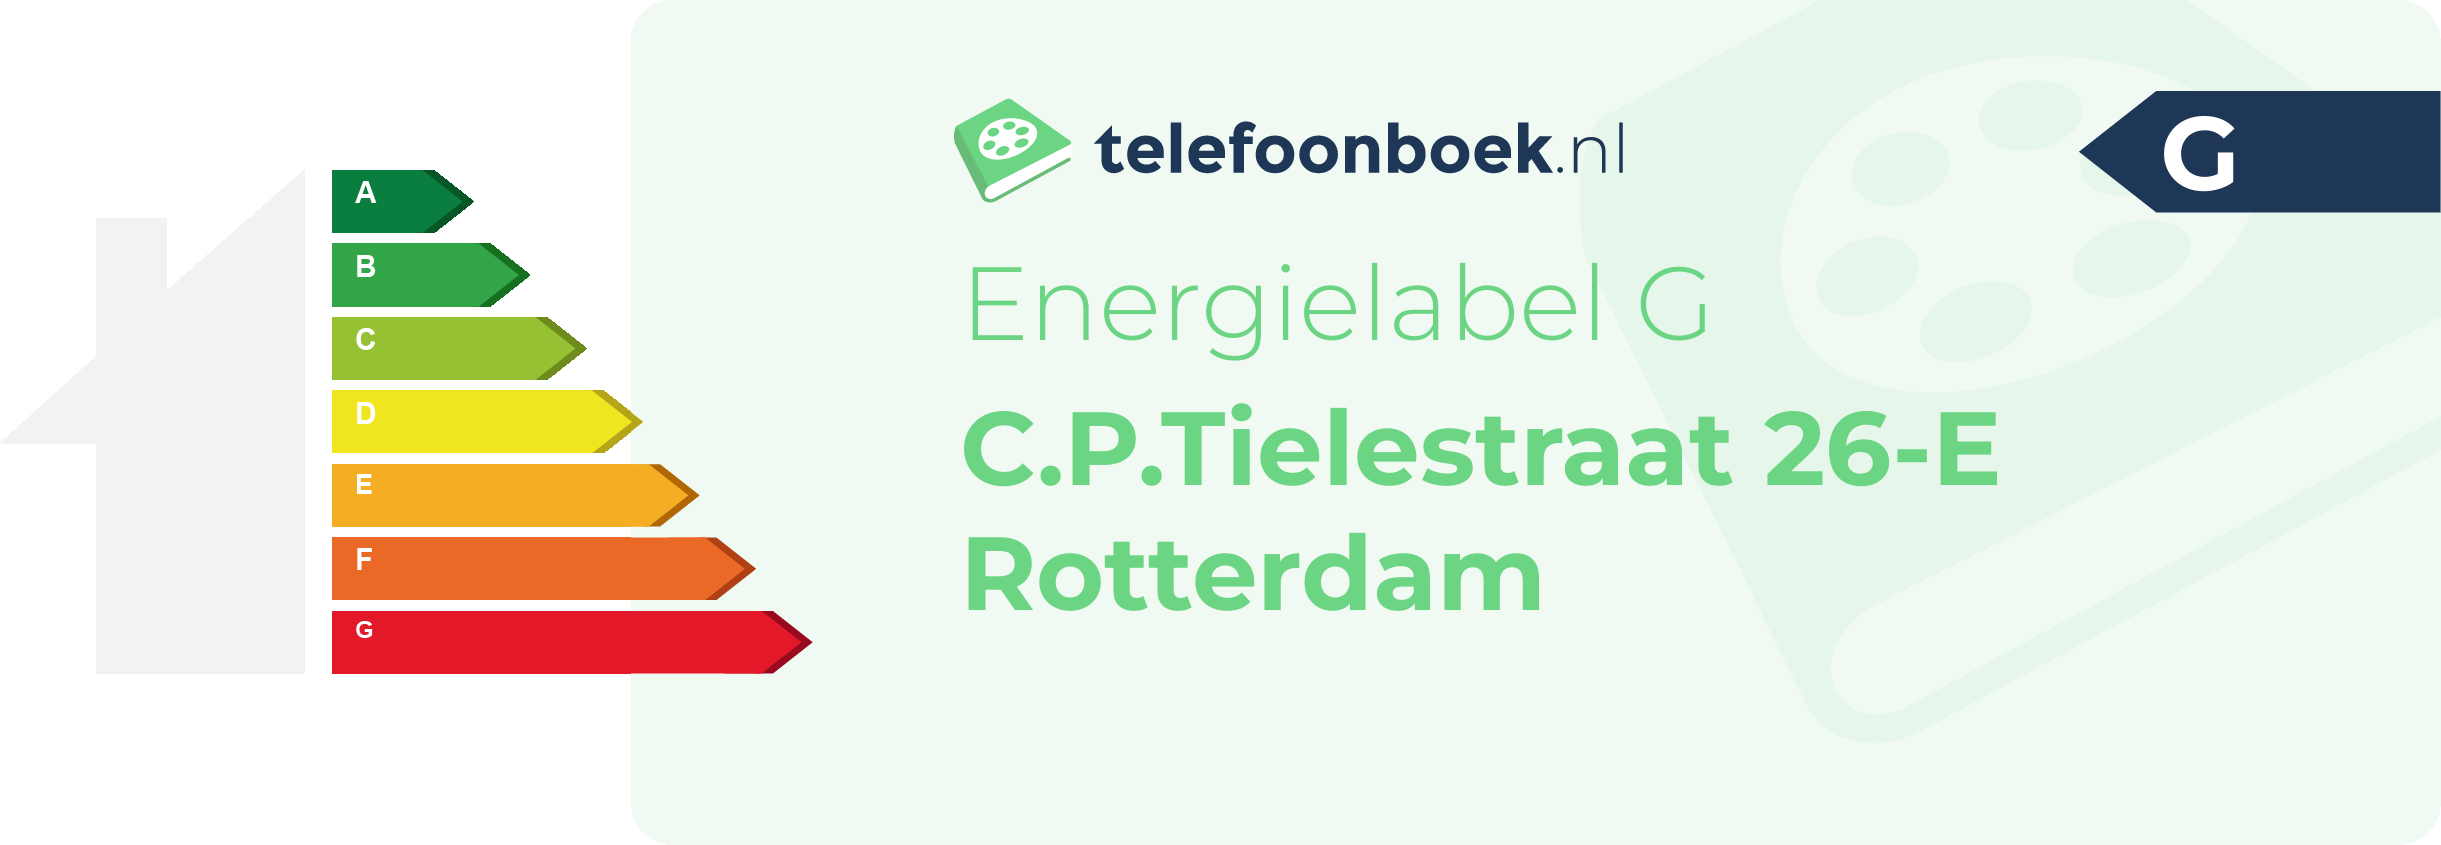 Energielabel C.P.Tielestraat 26-E Rotterdam